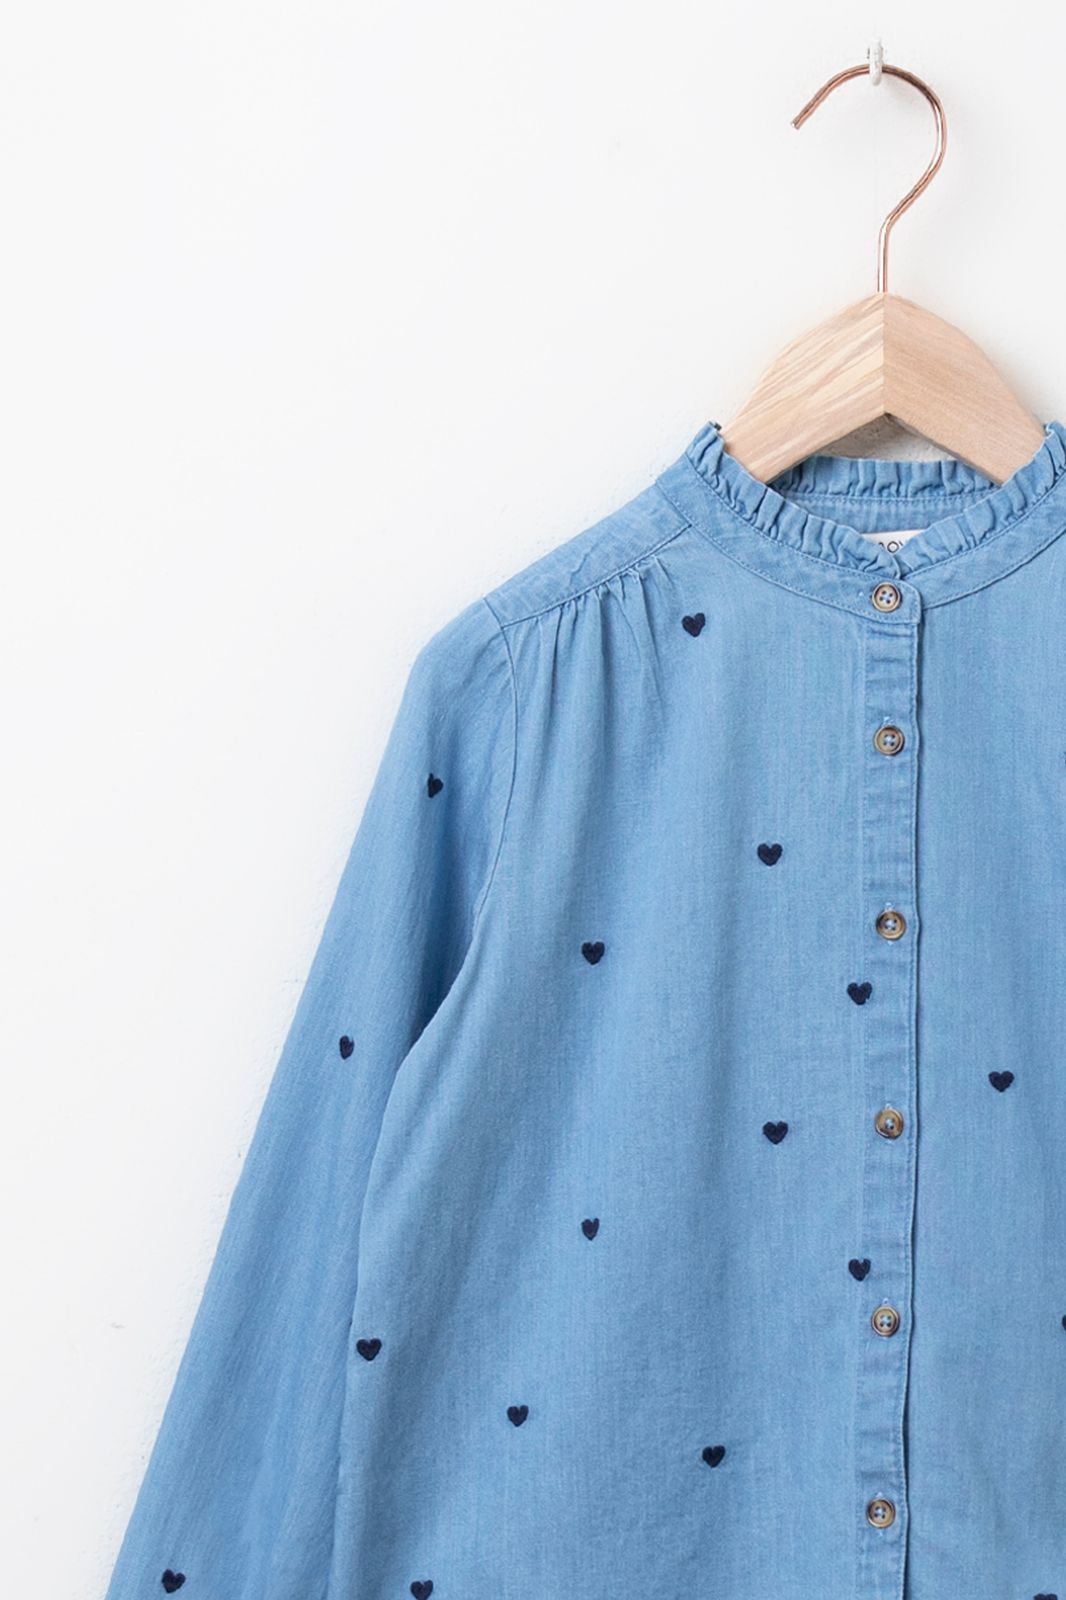 Lichtblauwe denim blouse met hartjes embroidery